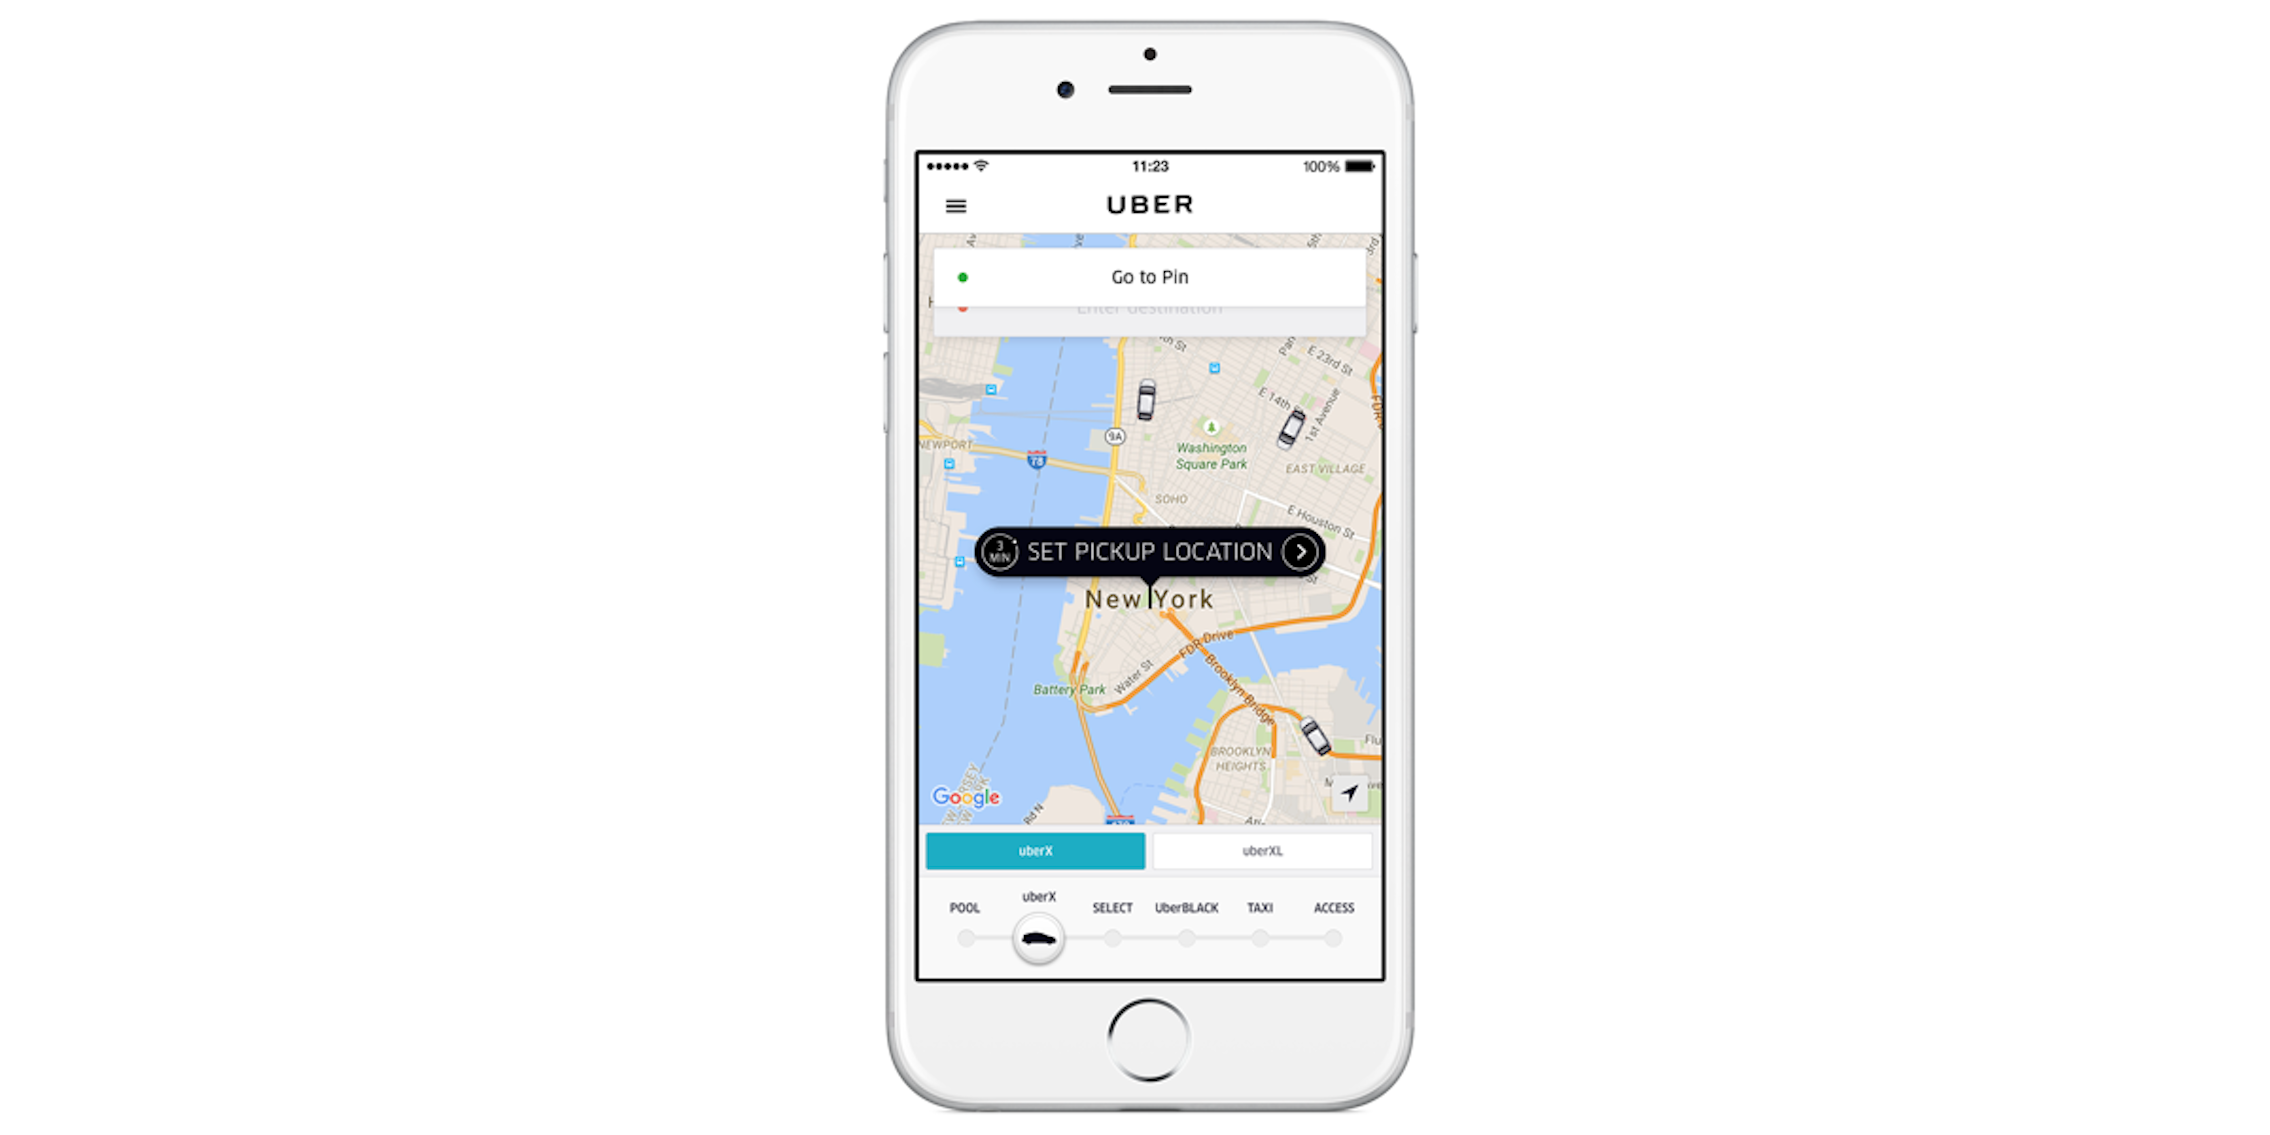 Uber app pickup location screen on iPhone